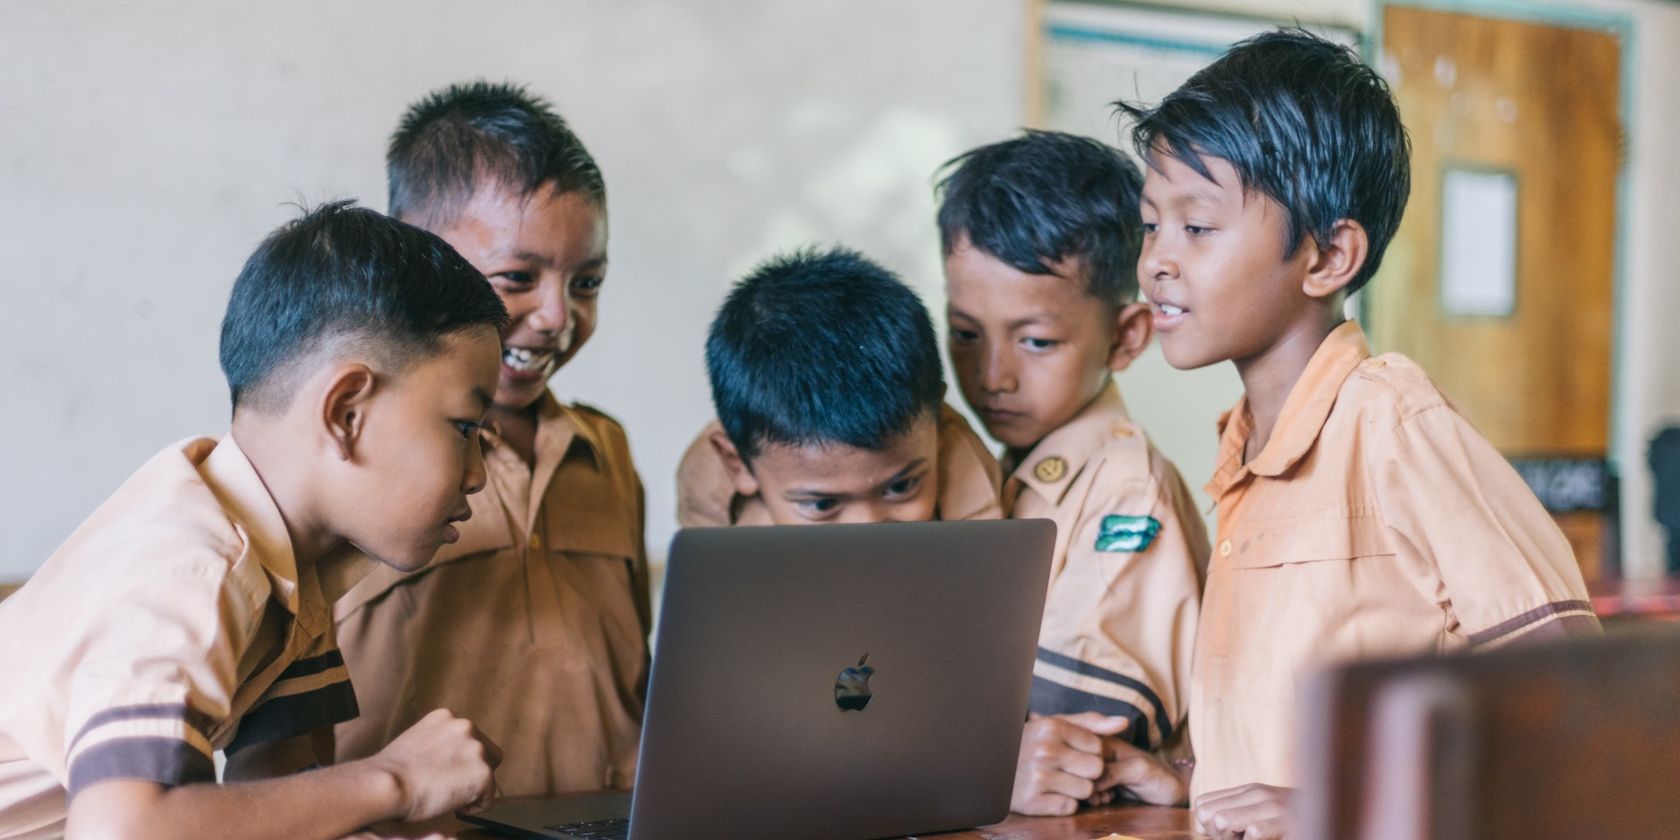 kids surrounding a laptop device